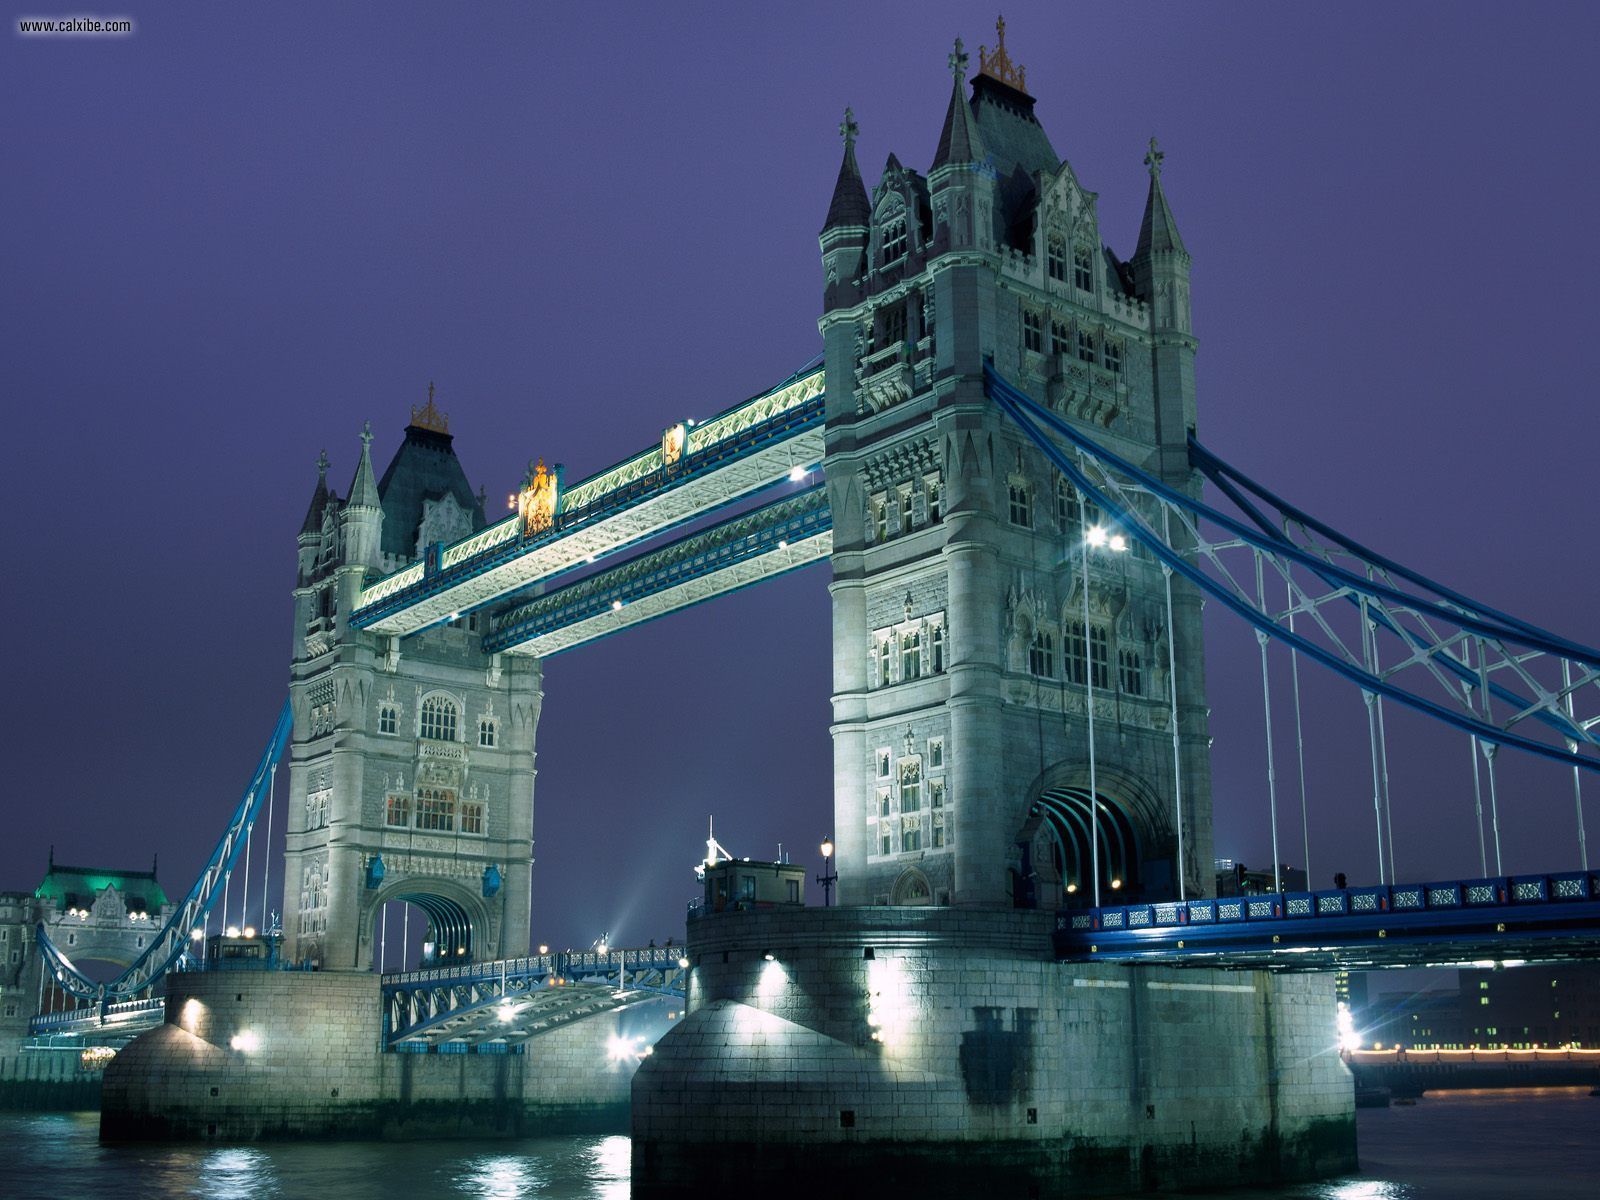 Known places: Tower Bridge, London, England, picture nr. 21079